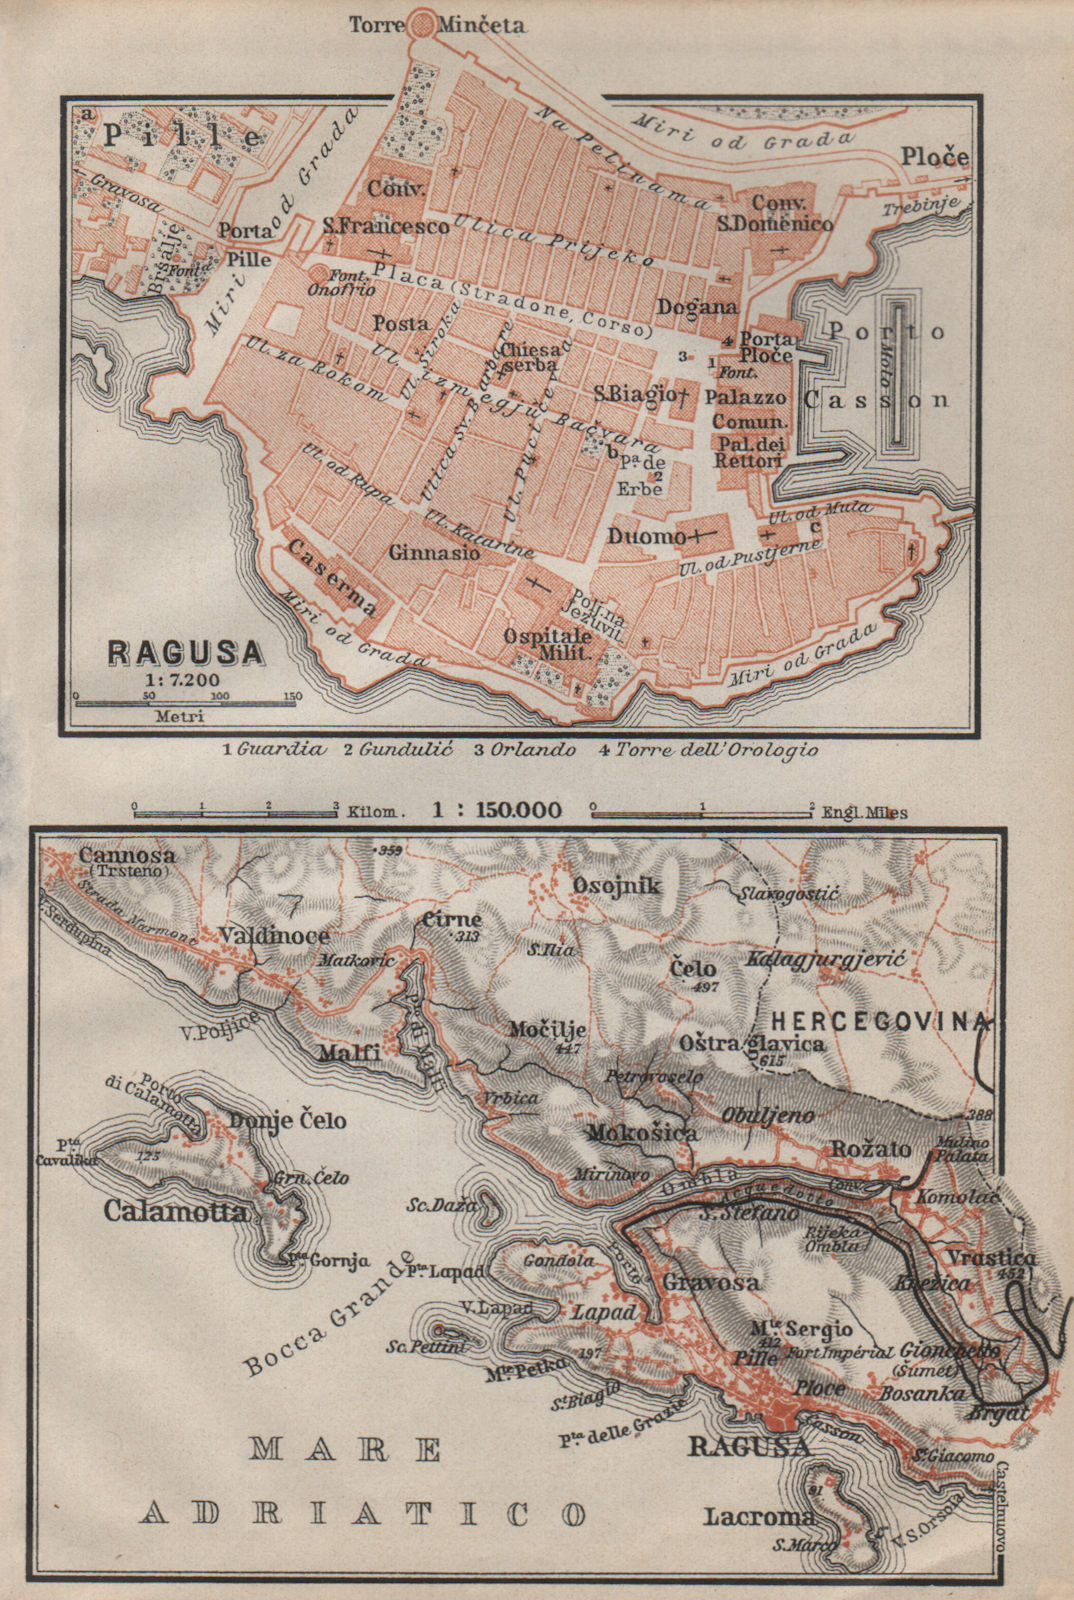 DUBROVNIK (RAGUSA) town city plan & environs. Calamotta. Croatia karta 1905 map